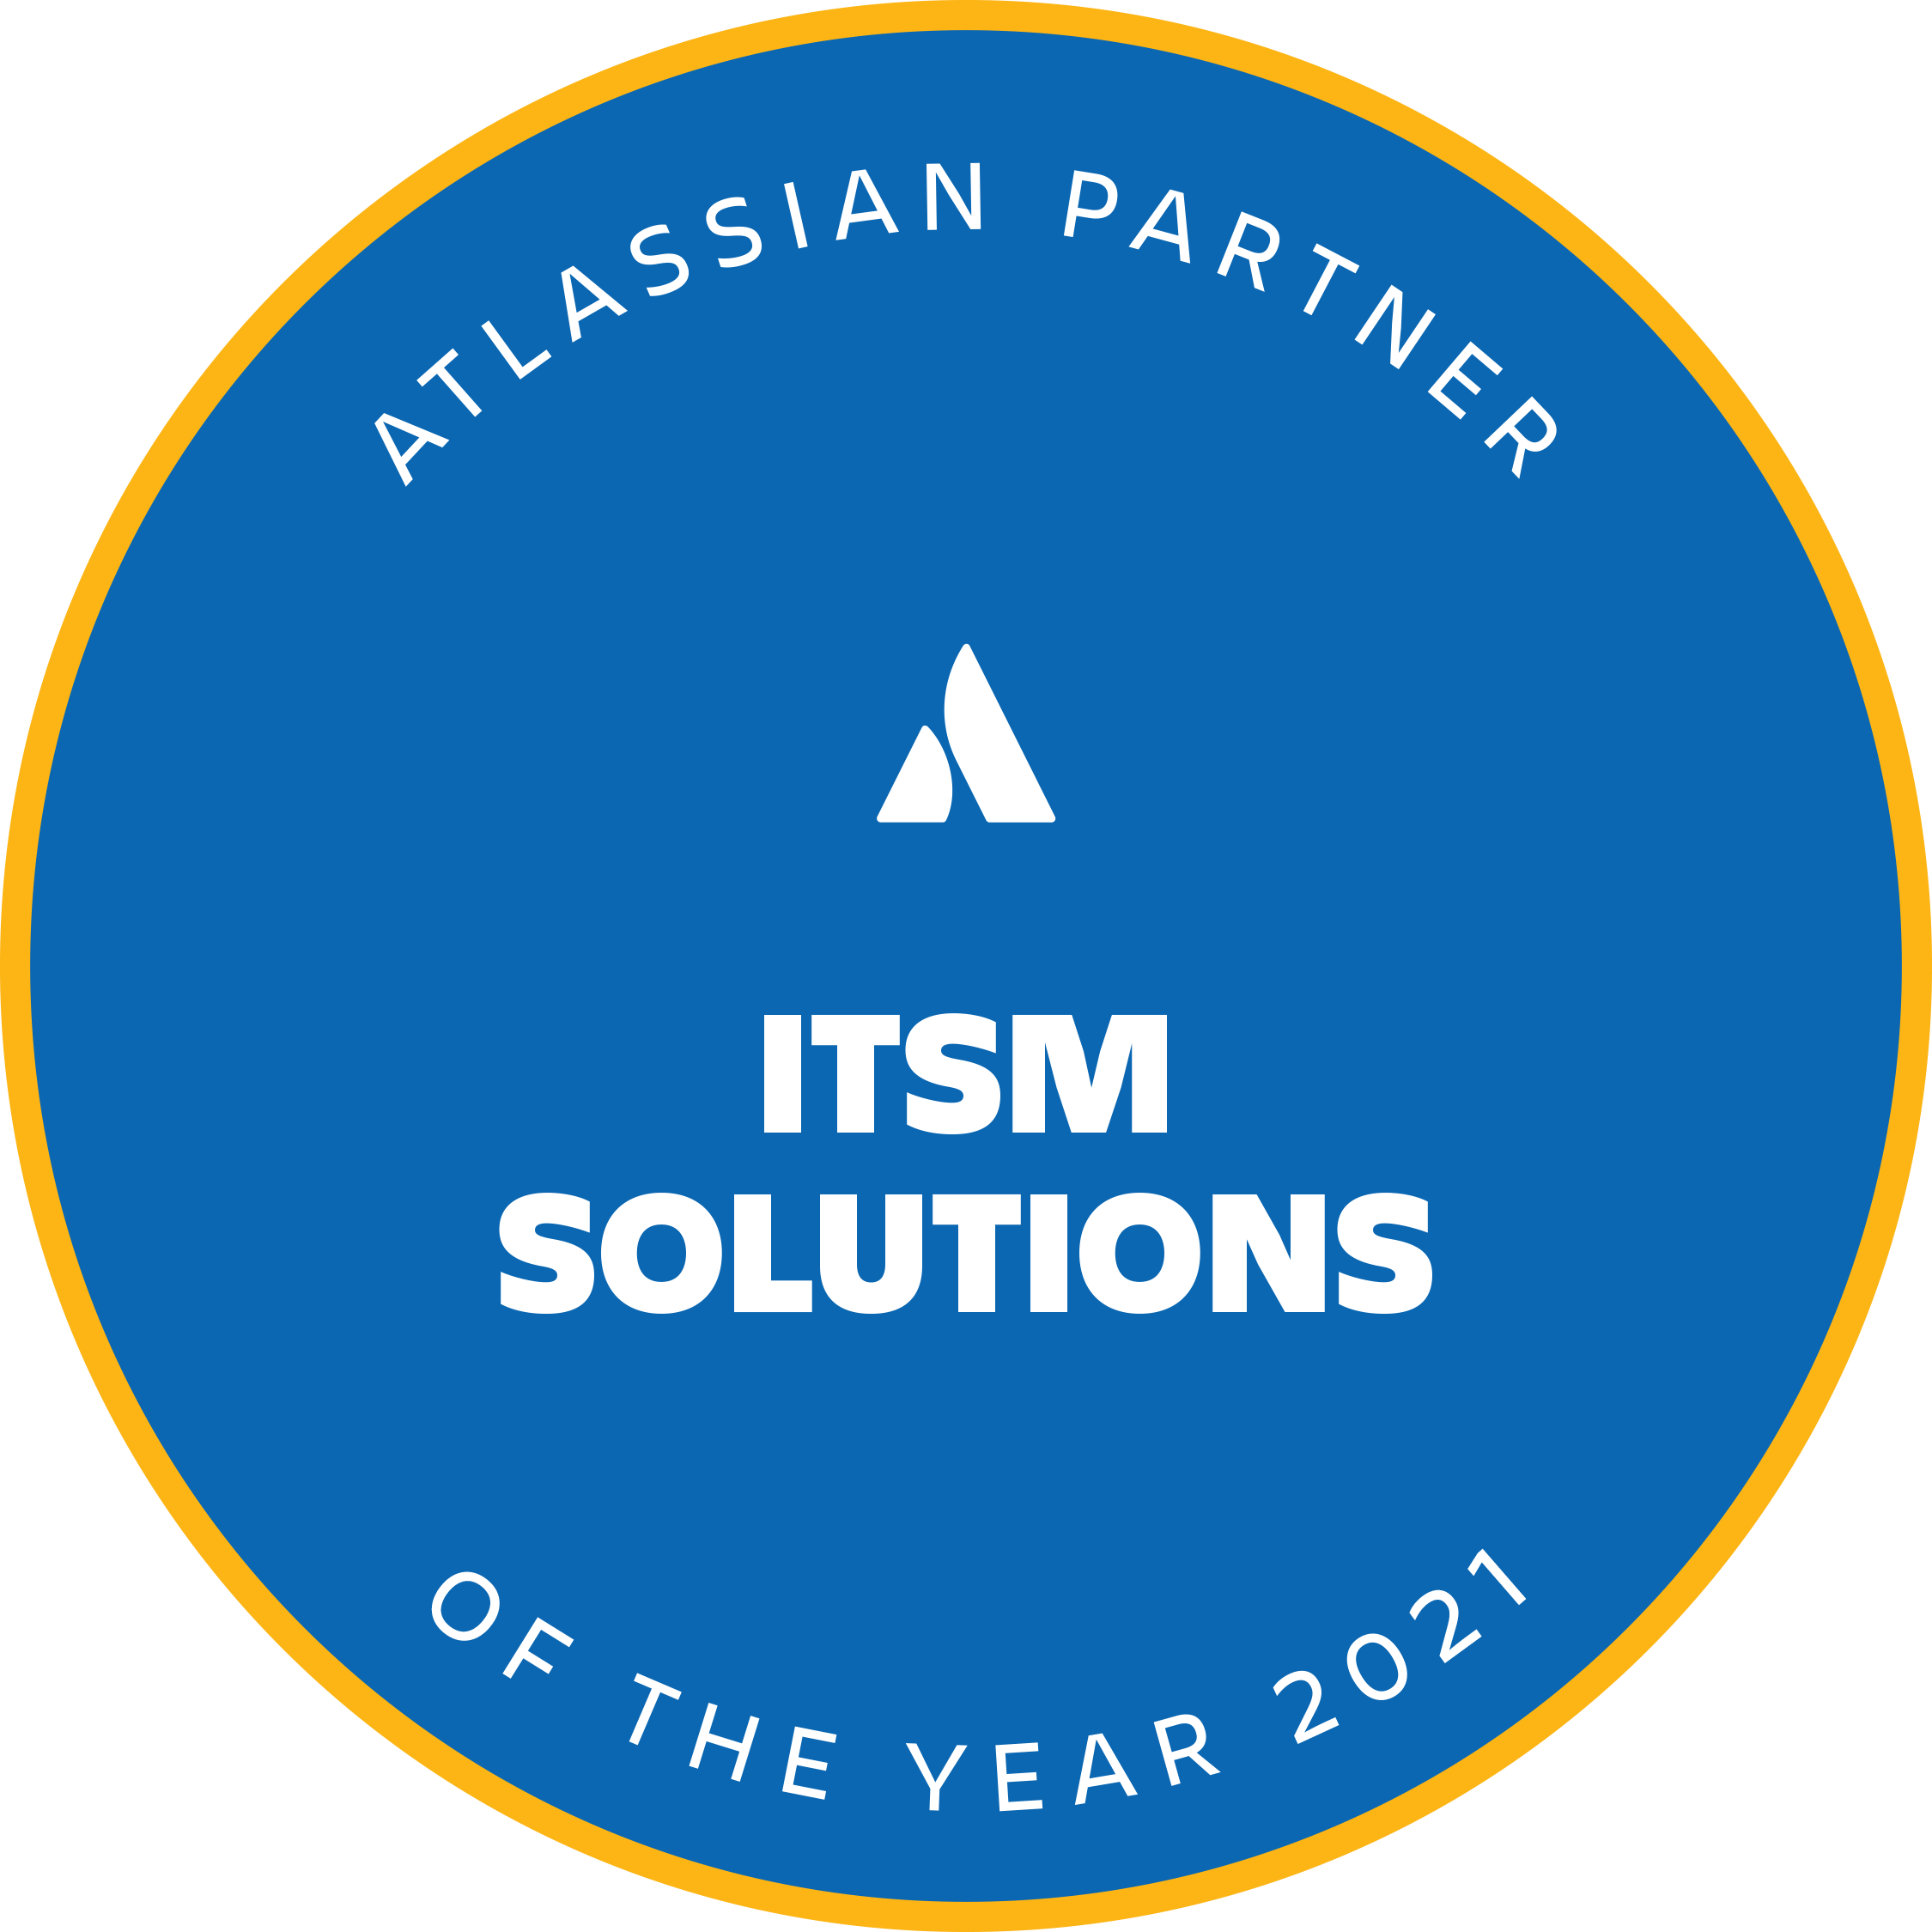 Atlassian Partner of the Year ITSM